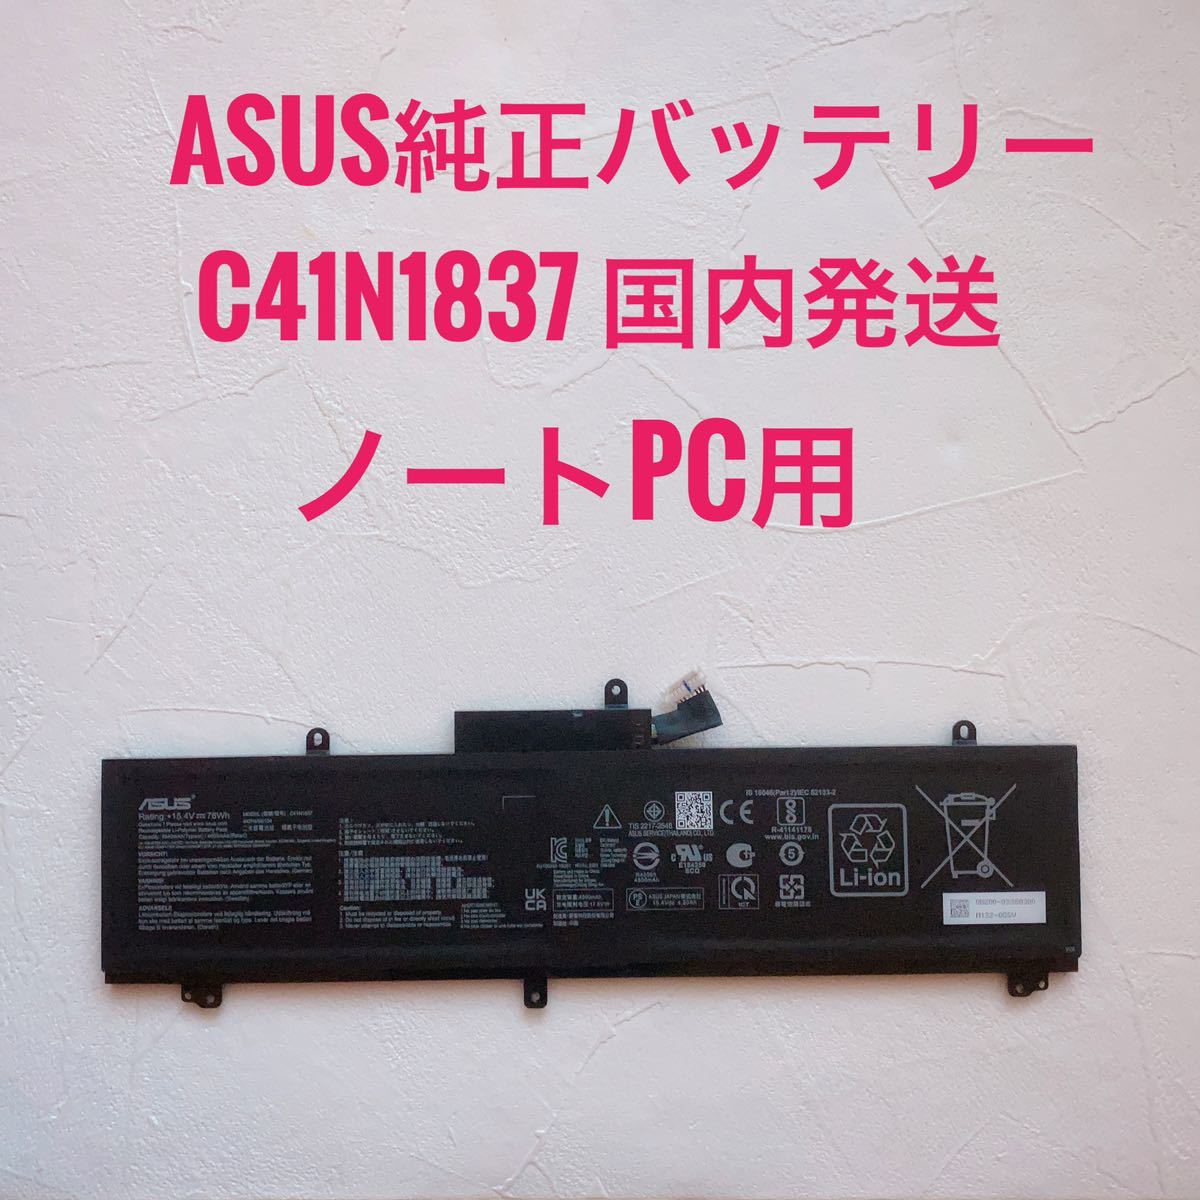 ASUS ROG Zephyrus C41N1837 純正ノートPC用バッテリー